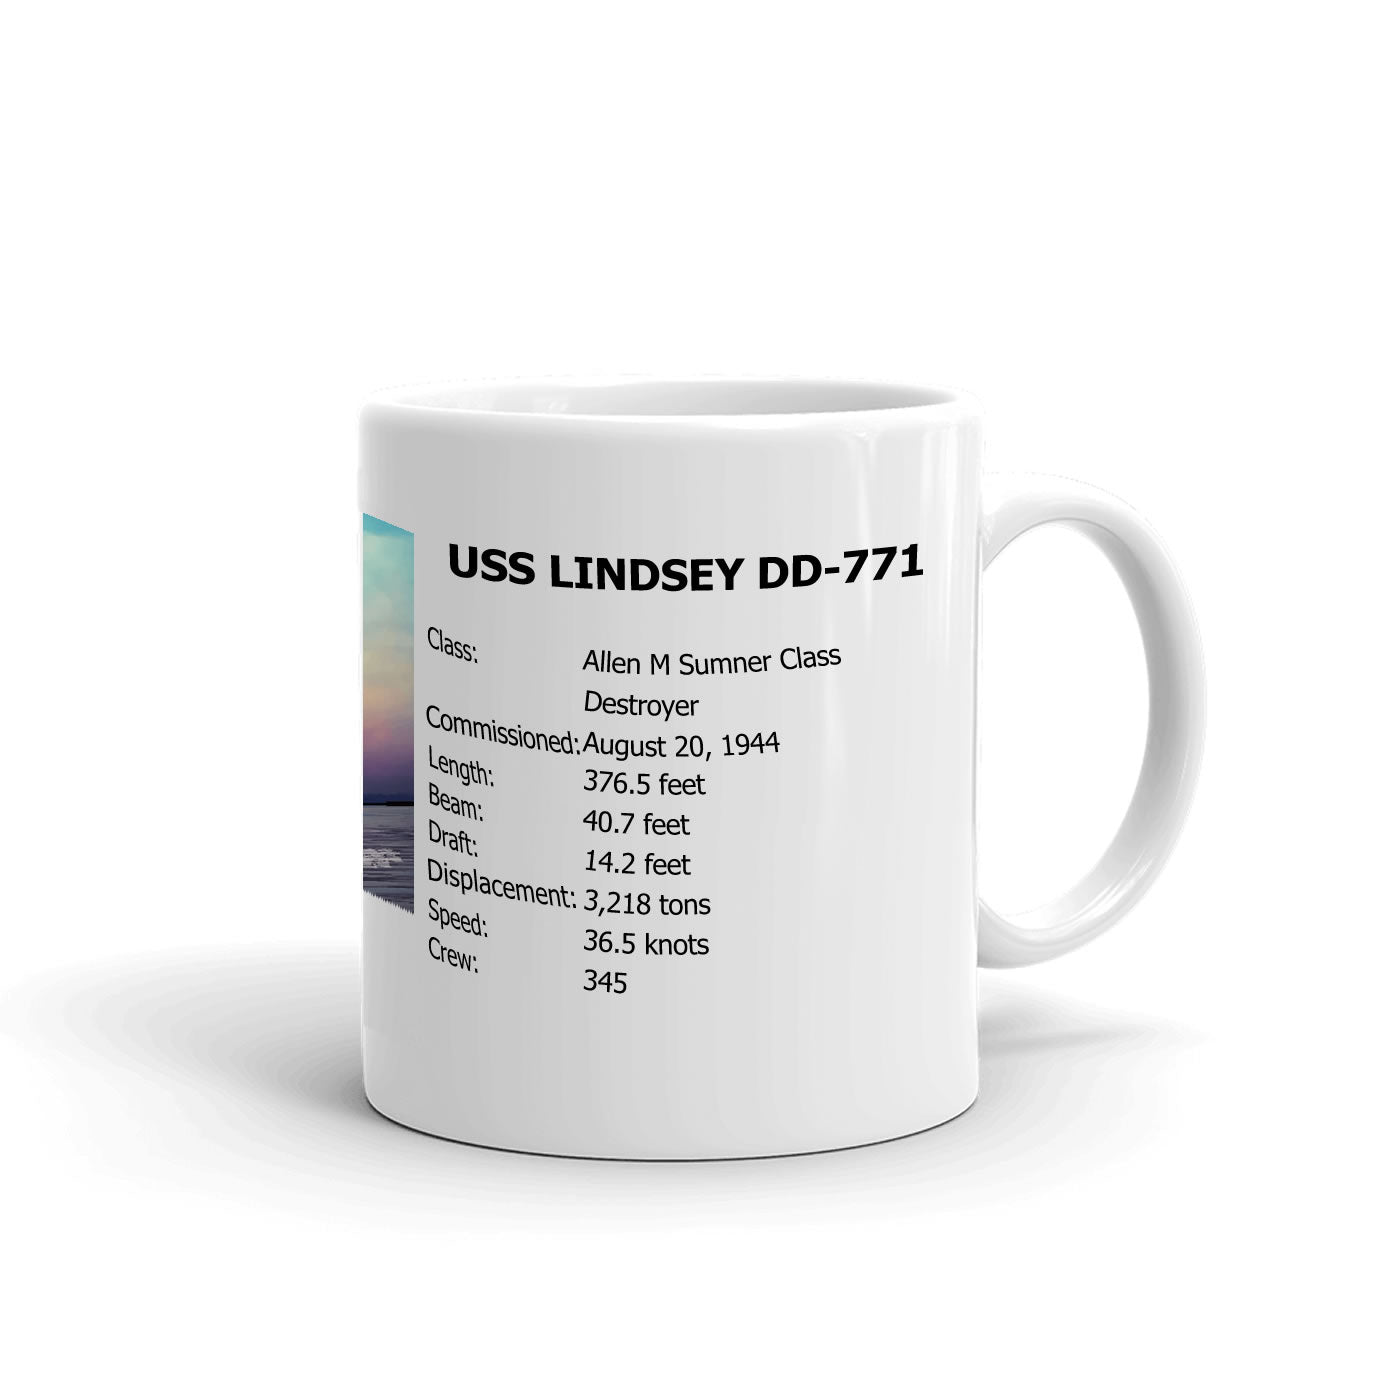 USS Lindsey DD-771 Coffee Cup Mug Right Handle